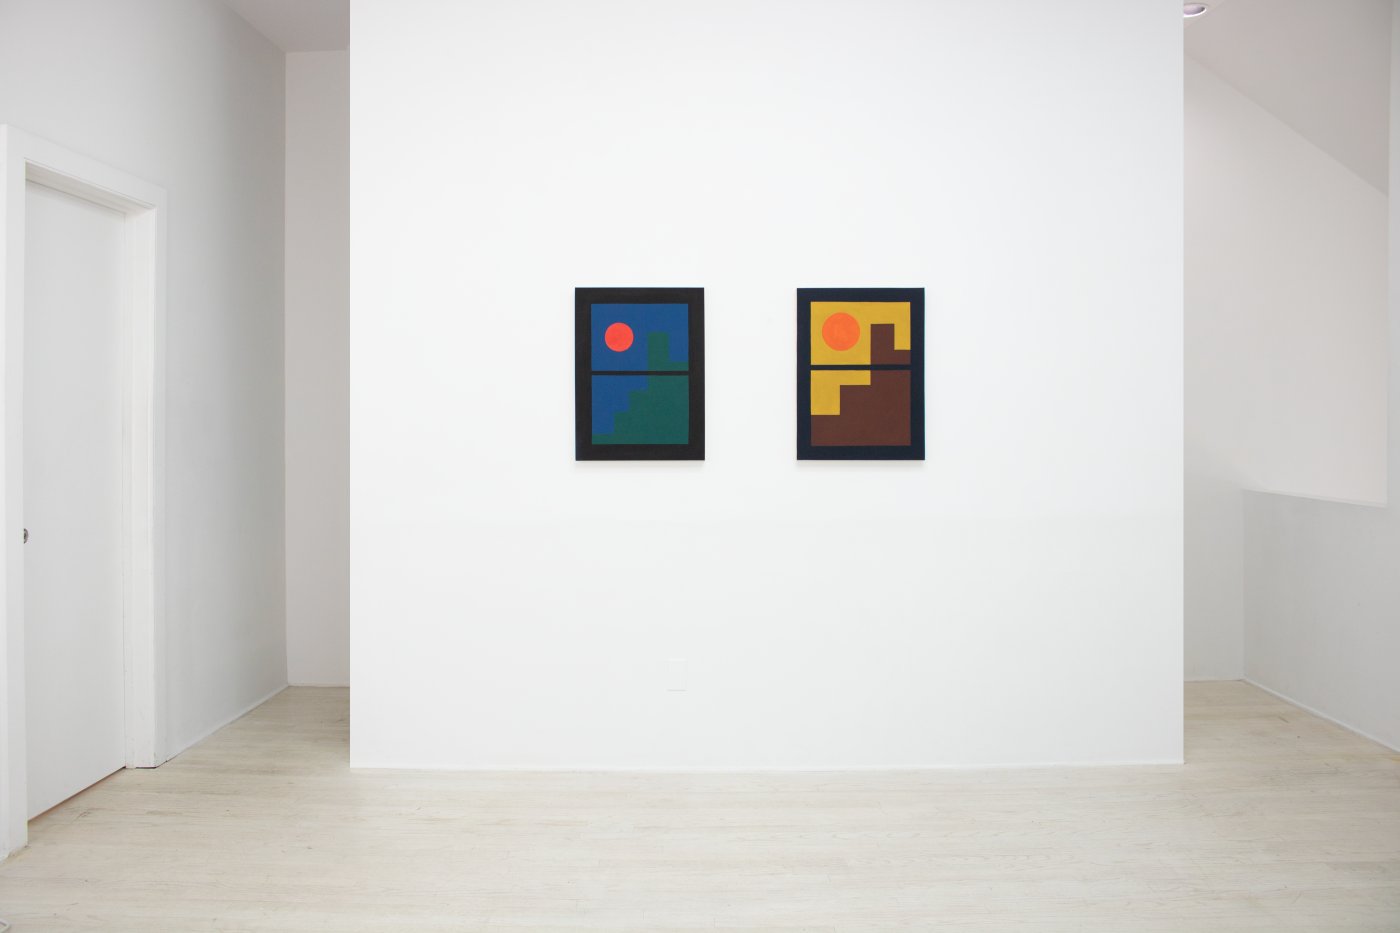 Installation image for Denise Kupferschmidt - Windows, at Halsey McKay Gallery